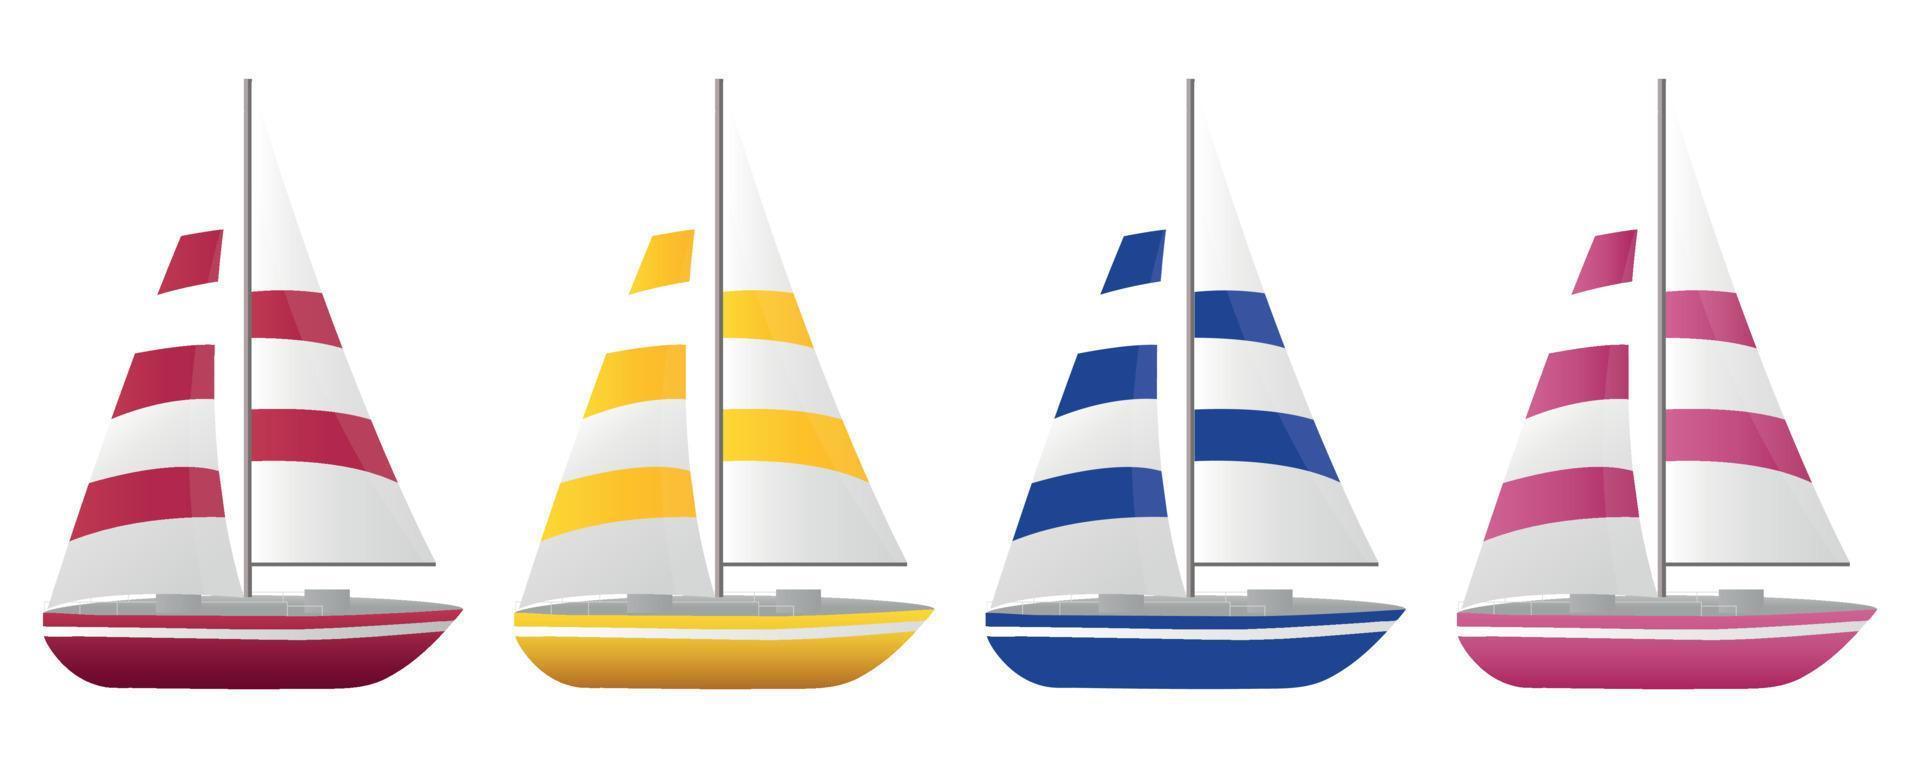 Cartoon travel boat, sailboat collection. Vector illustration.